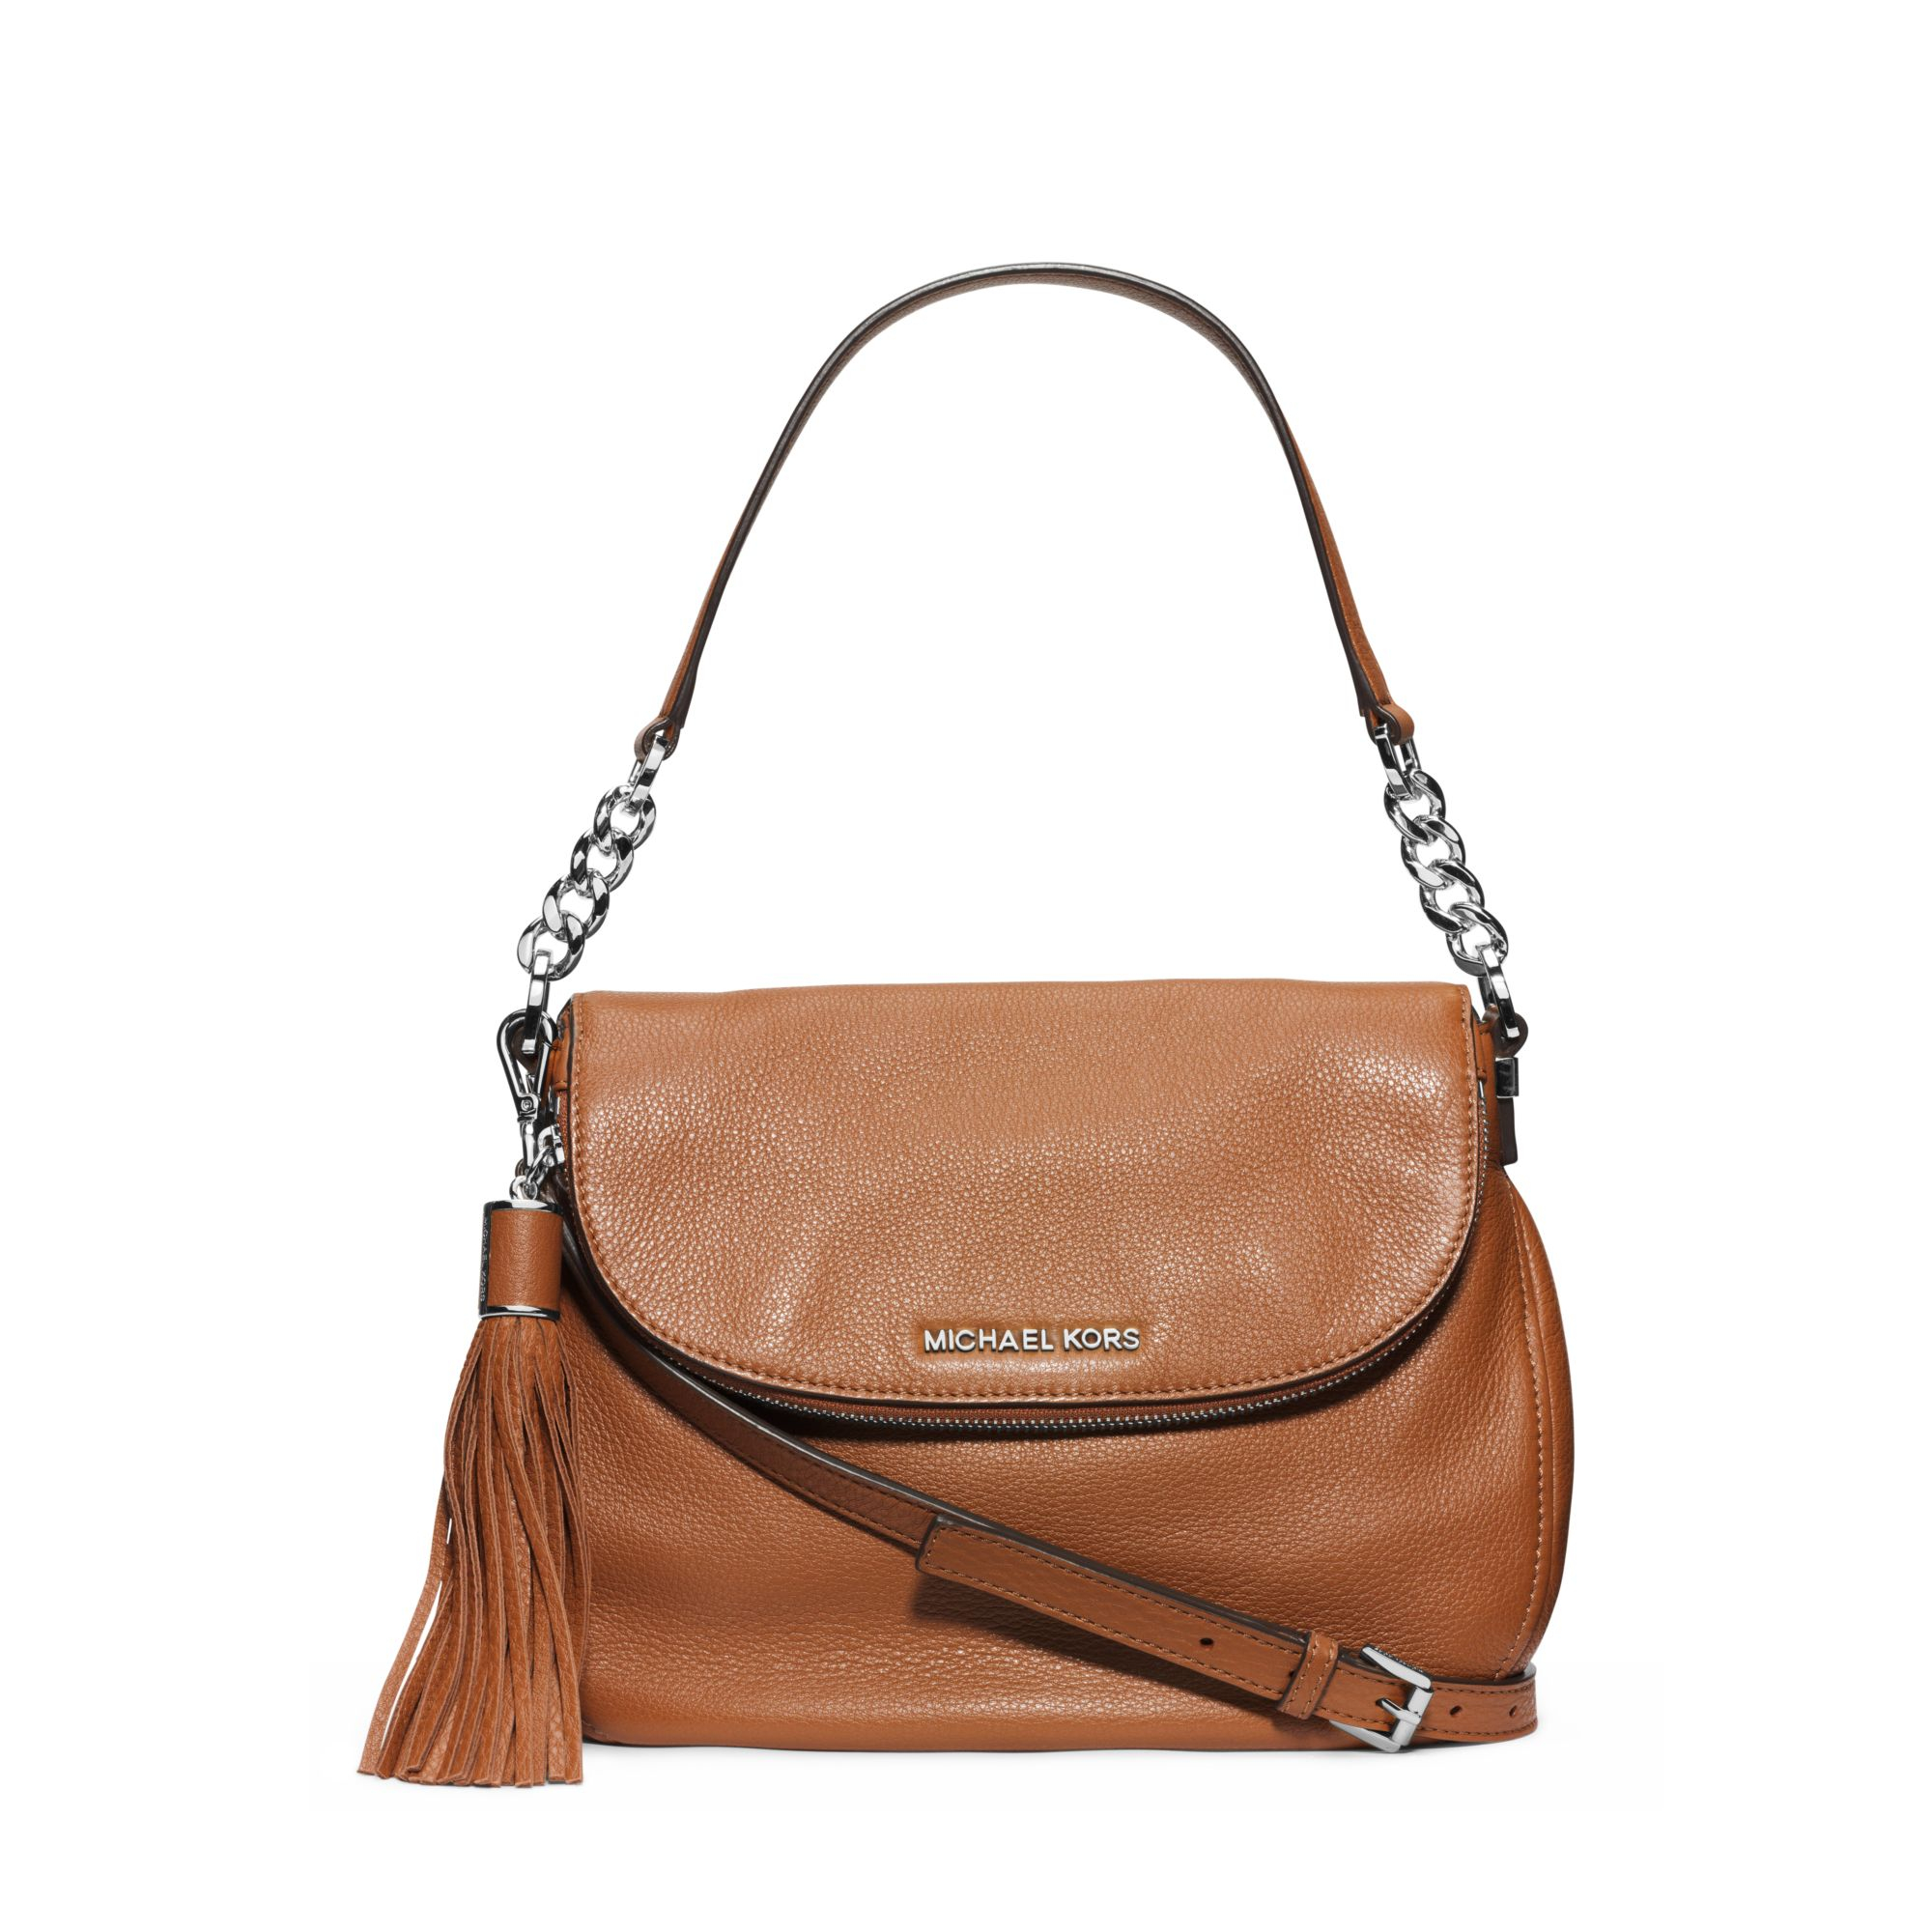 Lyst - Michael Kors Bedford Medium Leather Shoulder Bag in Brown